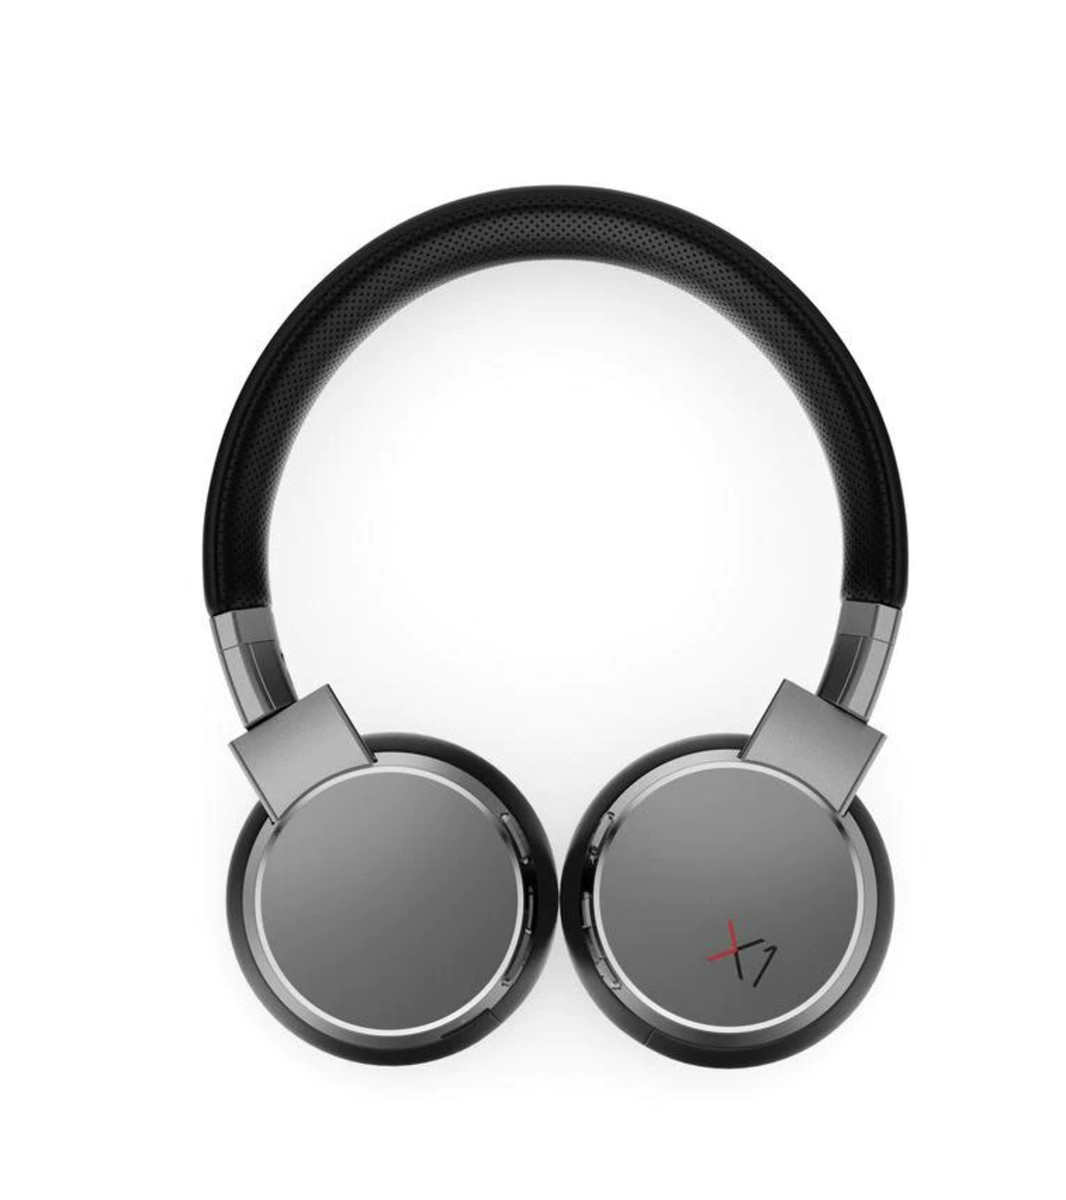 ThinkPad X1 Noise Cancellation Headphone